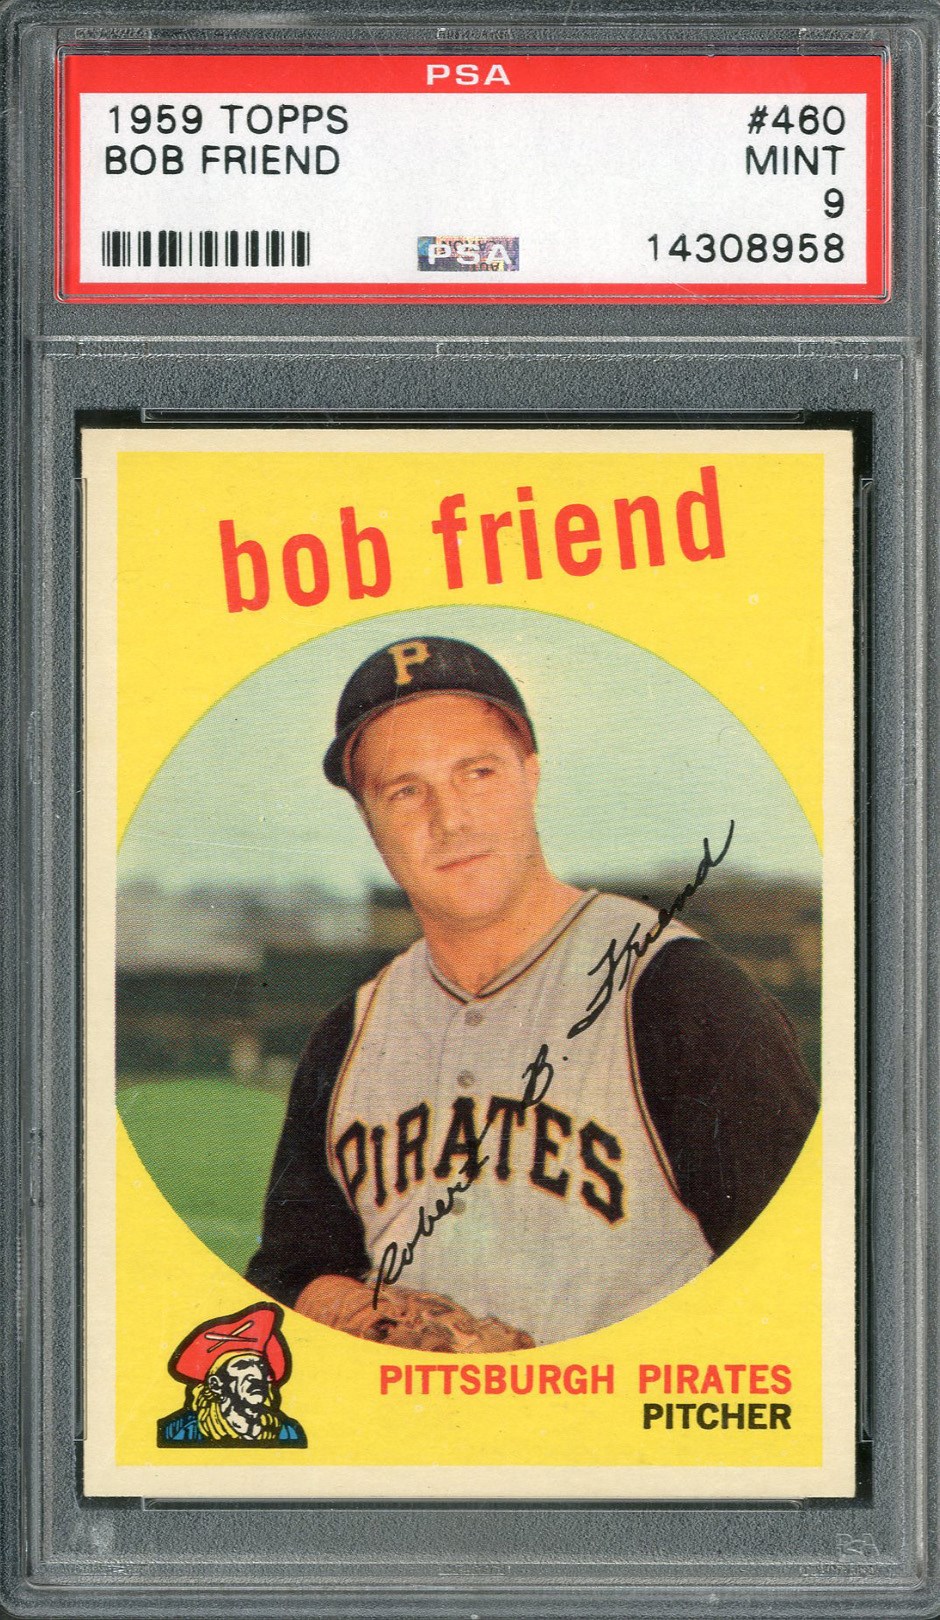 Baseball and Trading Cards - 1959 Topps #460 Bob Friend PSA MINT 9